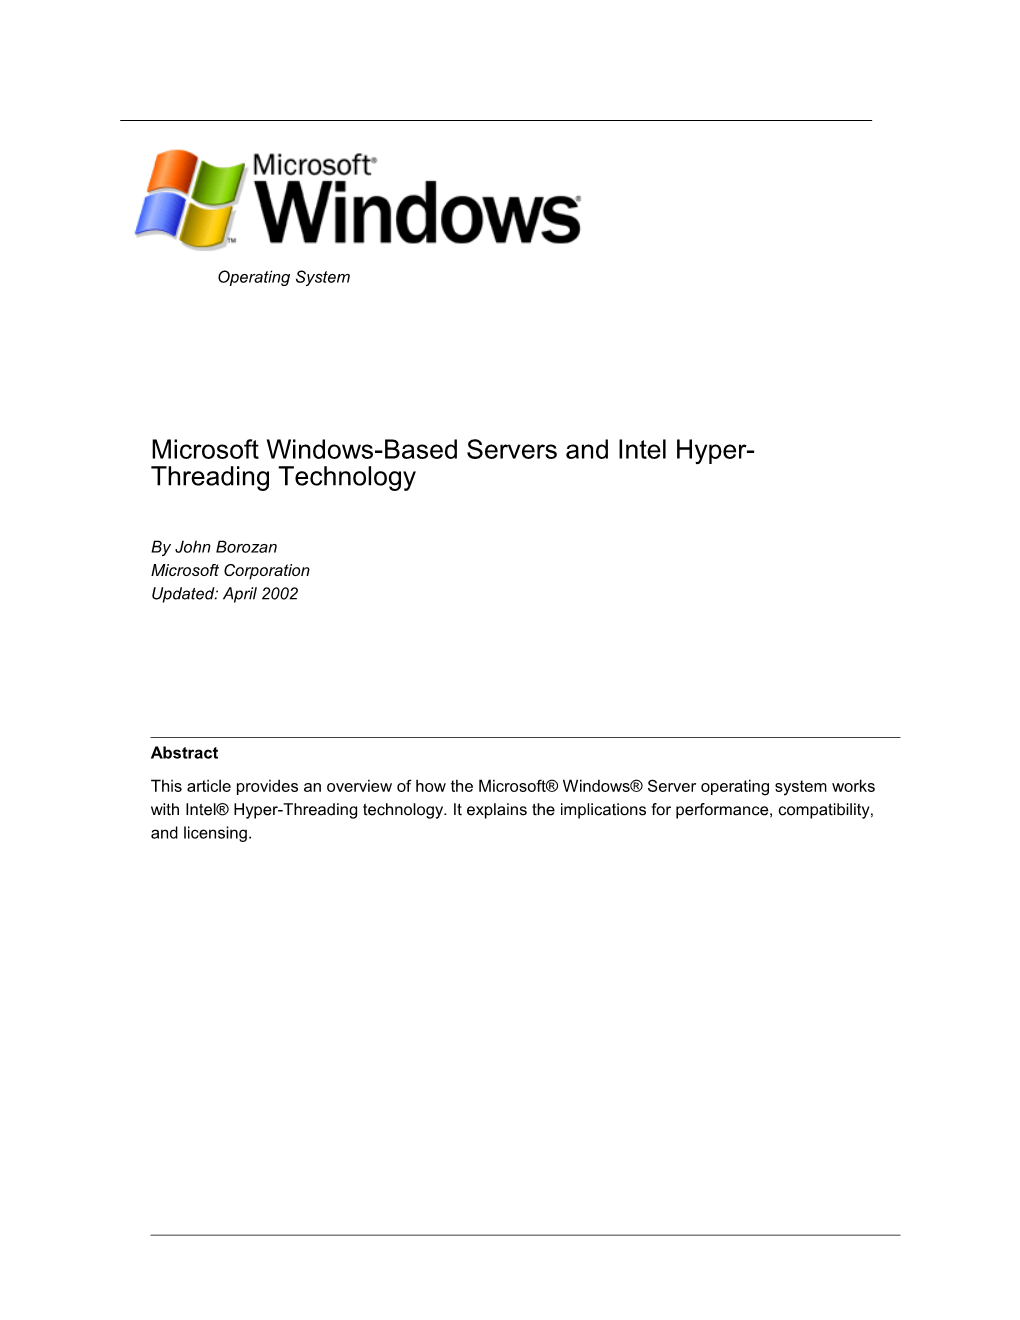 Microsoft Windows-Based Servers and Intel Hyper-Threading Technology